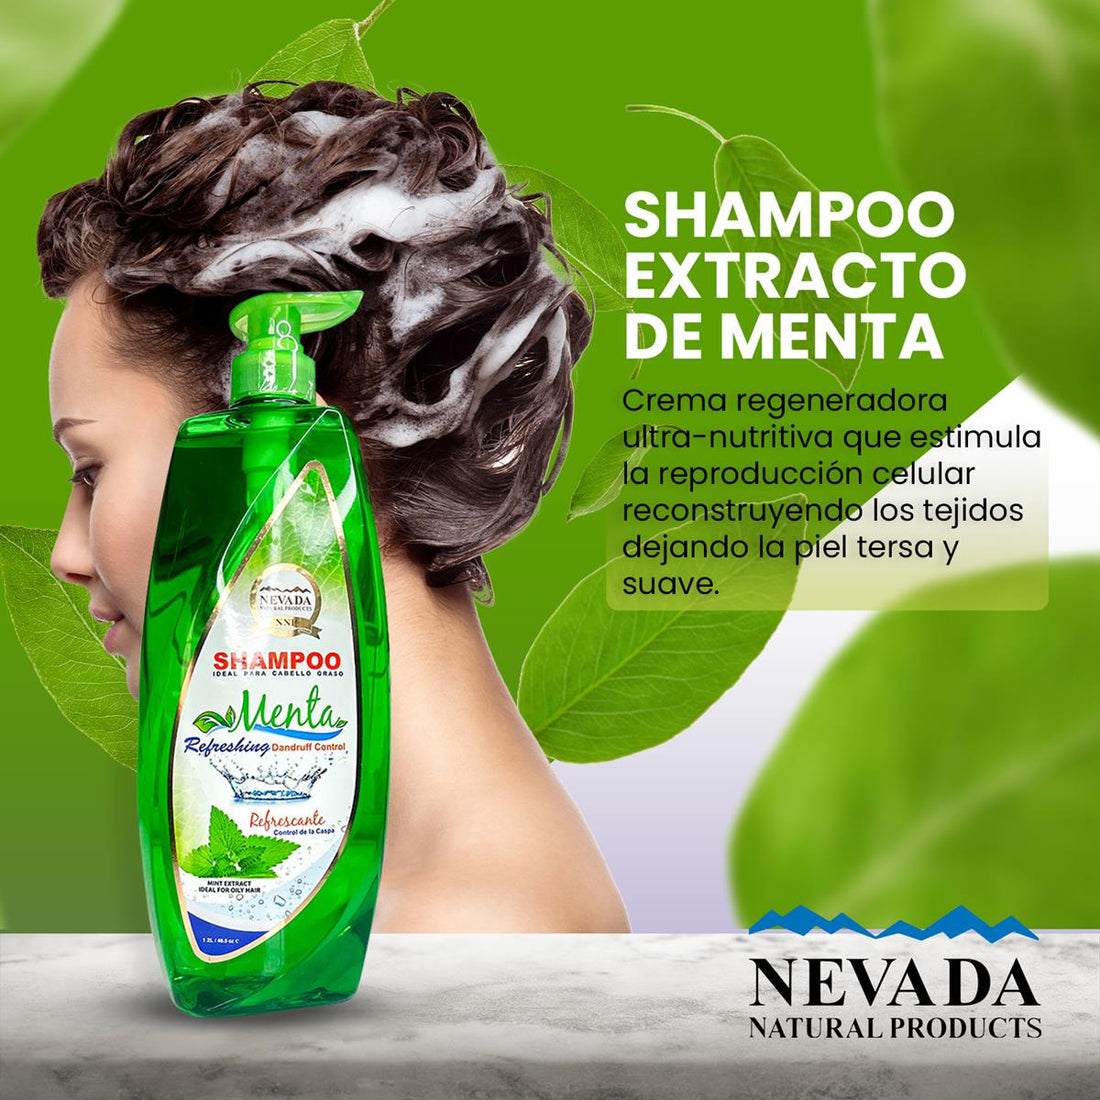 Shampoo extracto de menta 1.2lt - Nevada